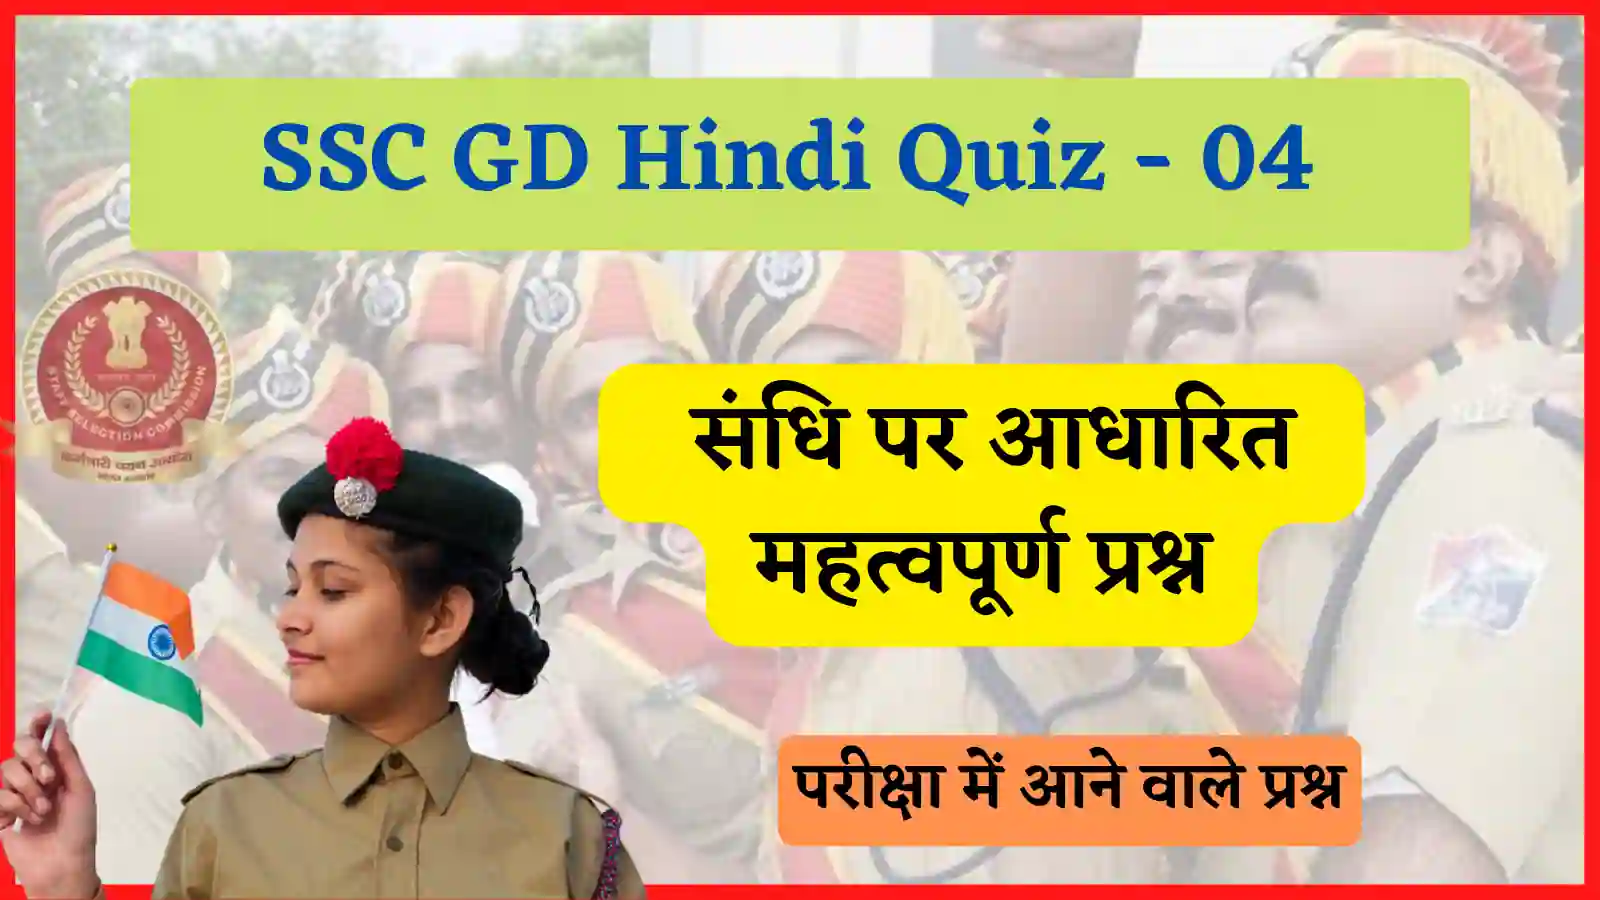 SSC GD Hindi Quiz - 04